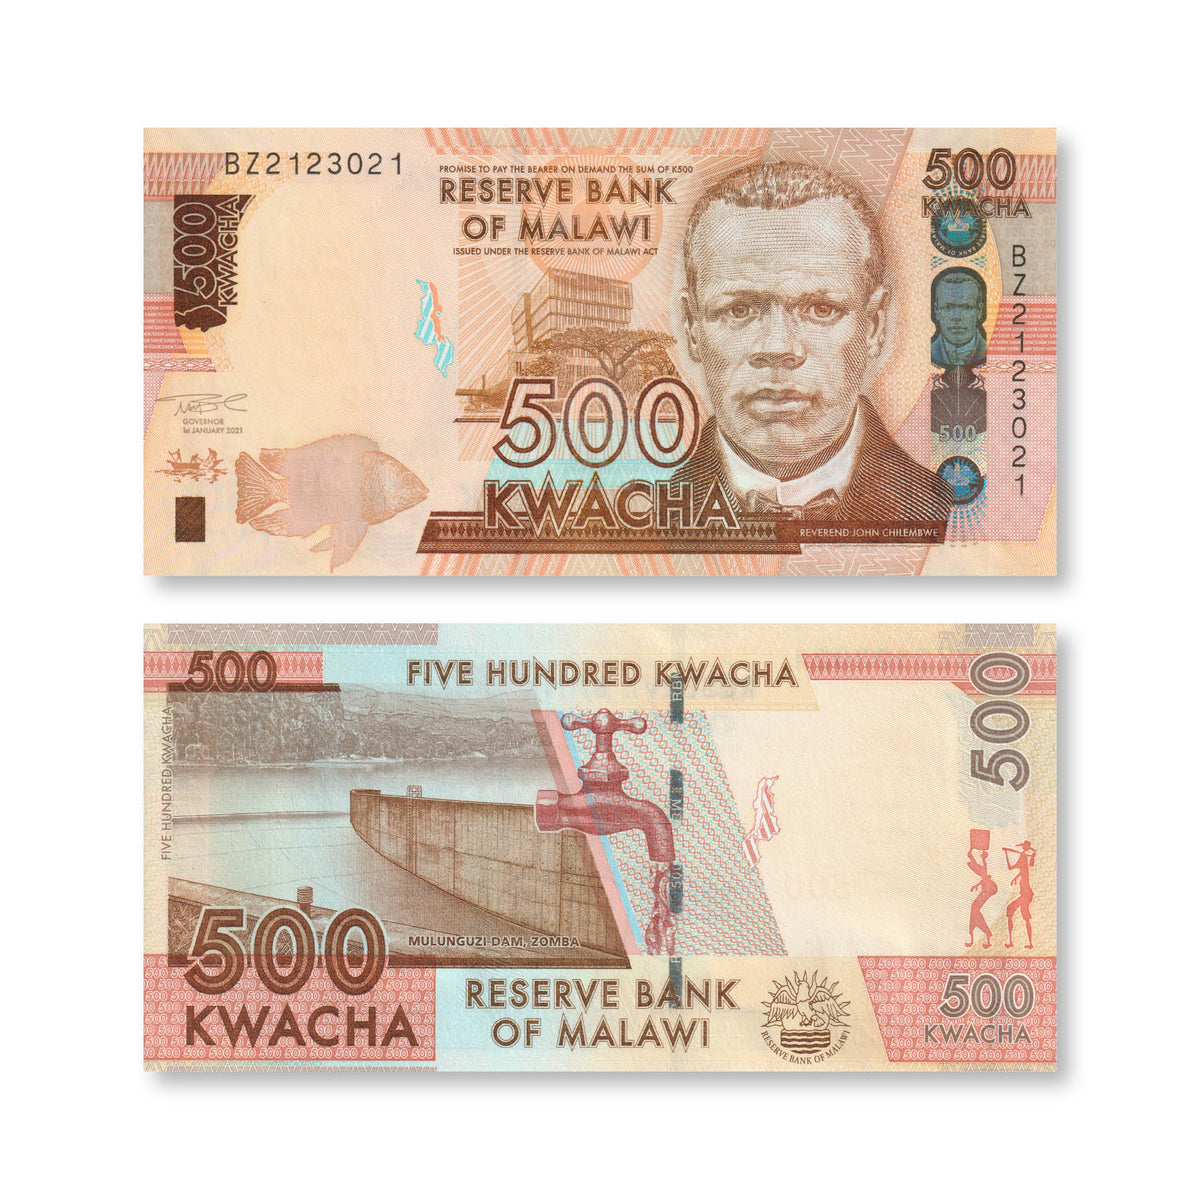 Malawi 500 Kwacha, 2021, B161c, P66, UNC - Robert's World Money - World Banknotes